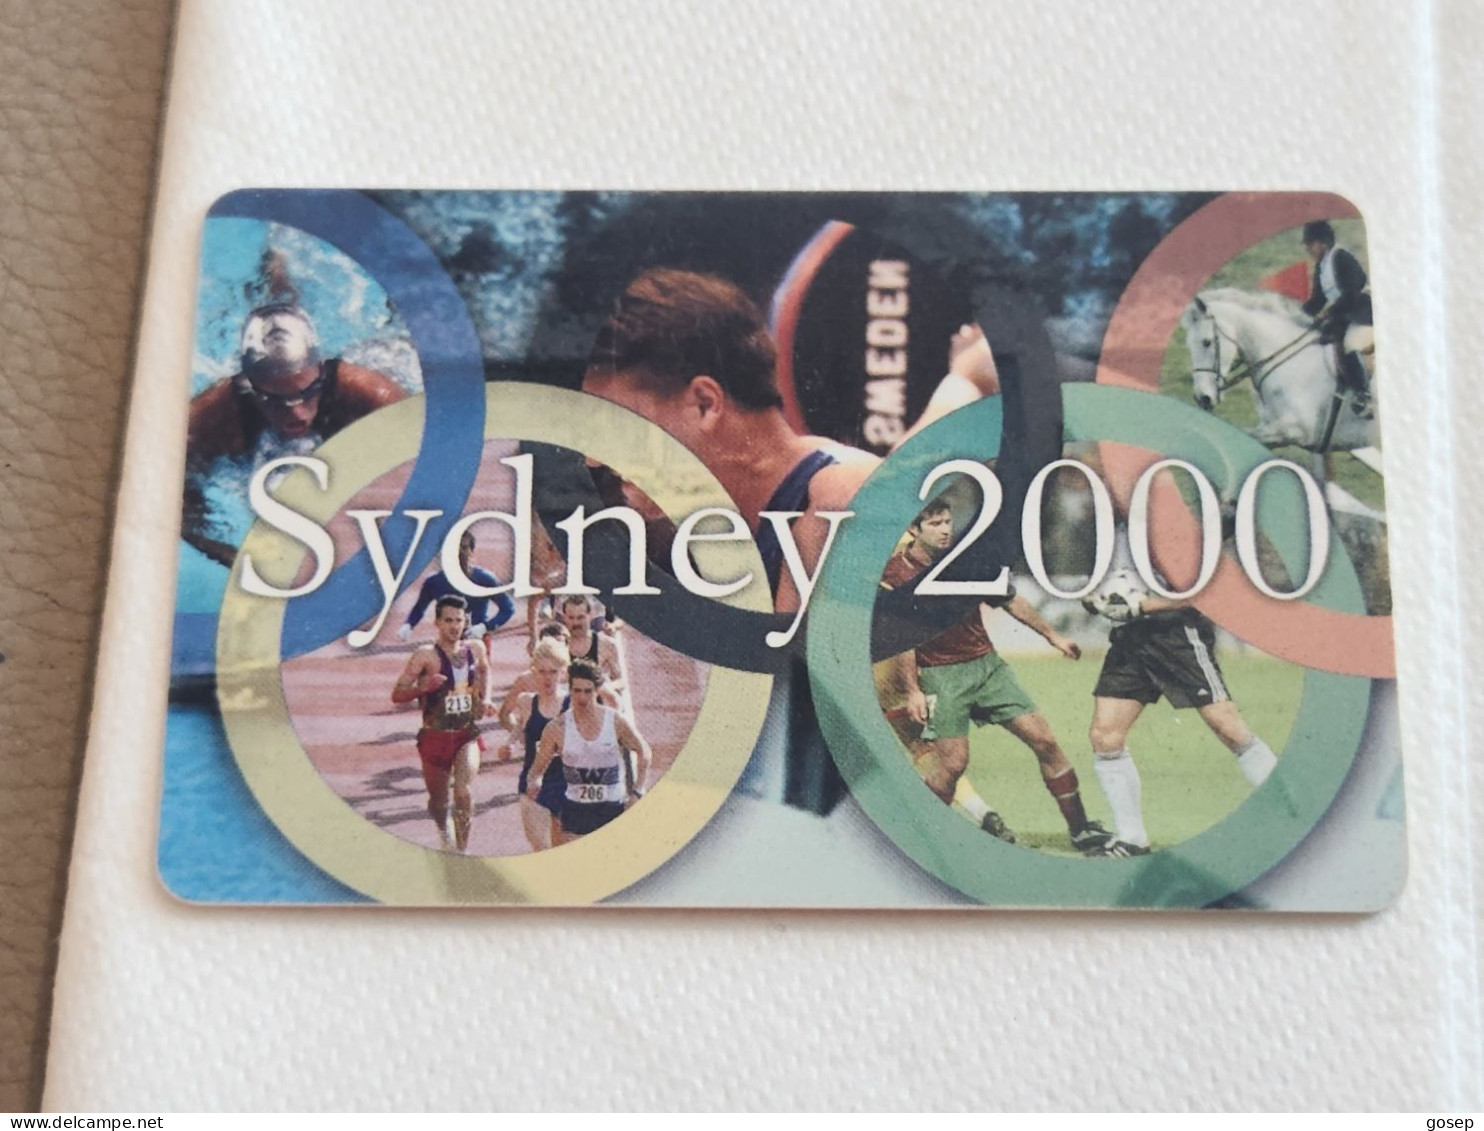 ROMANIA-(RO-ROM-0067A)-Sydney 2000-(Red)-(74)-(50.000 Lei)-(J99MV9)-used Card+1card Prepiad Free - Rumania